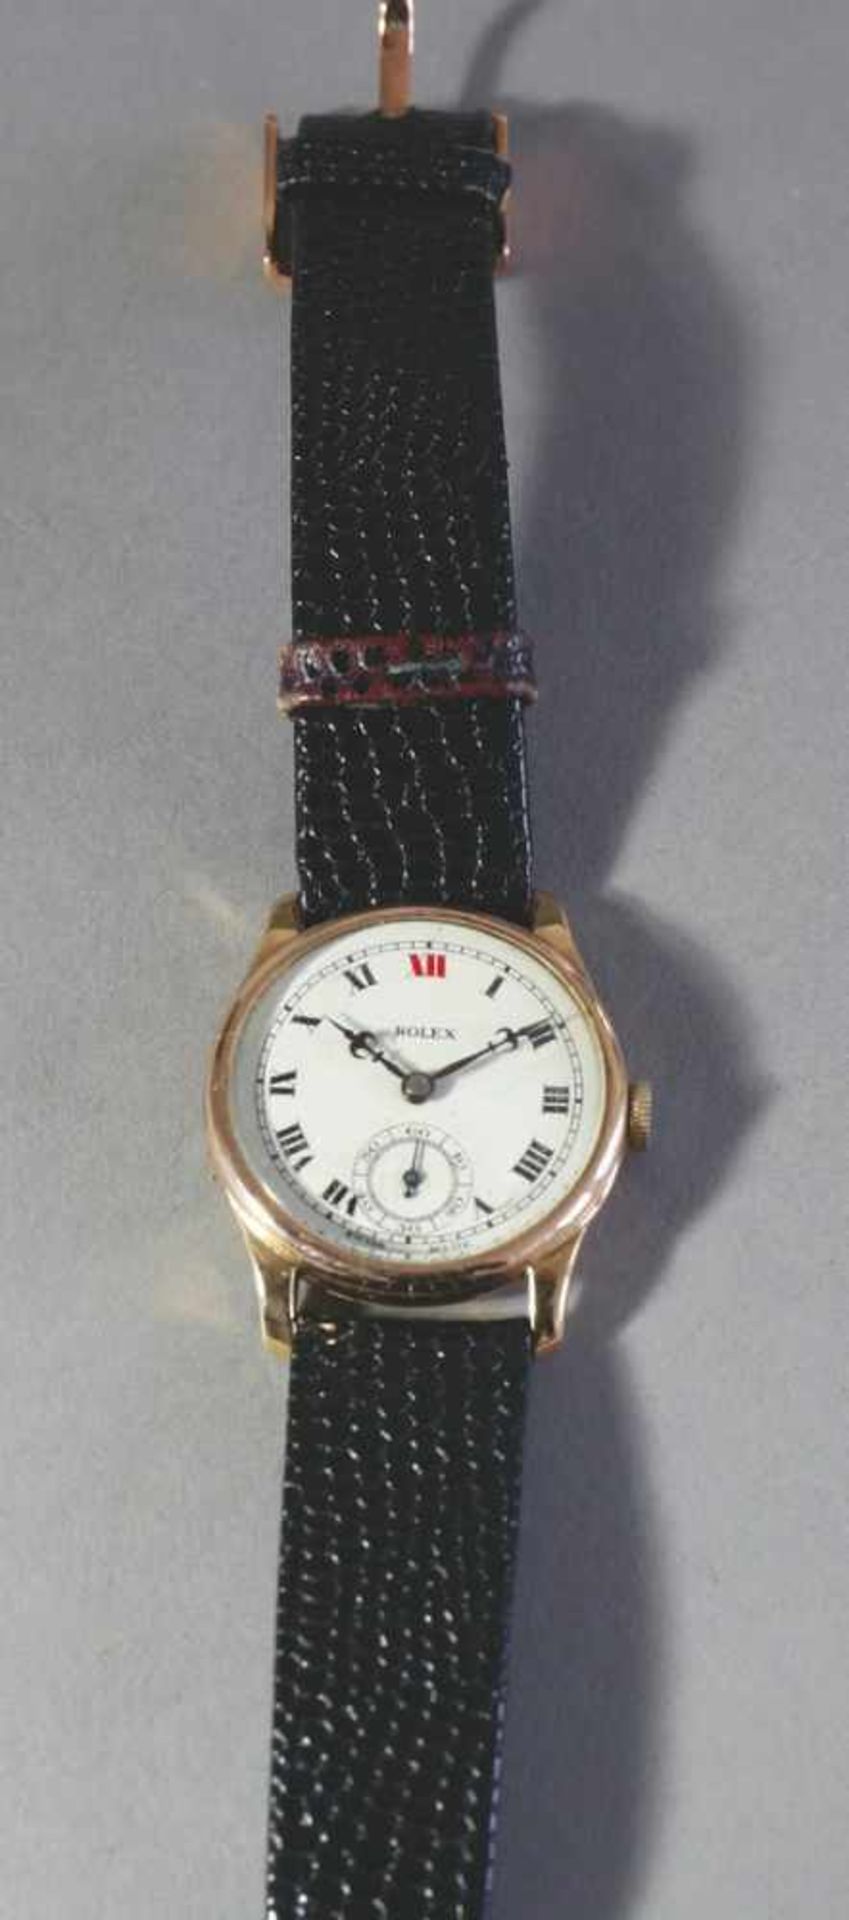 Rolex S.A., Genf1926-30Damenarmbanduhr. Handaufzug. 1926-30. Rotgold. 9K. Helles Zifferblatt mit - Bild 2 aus 2